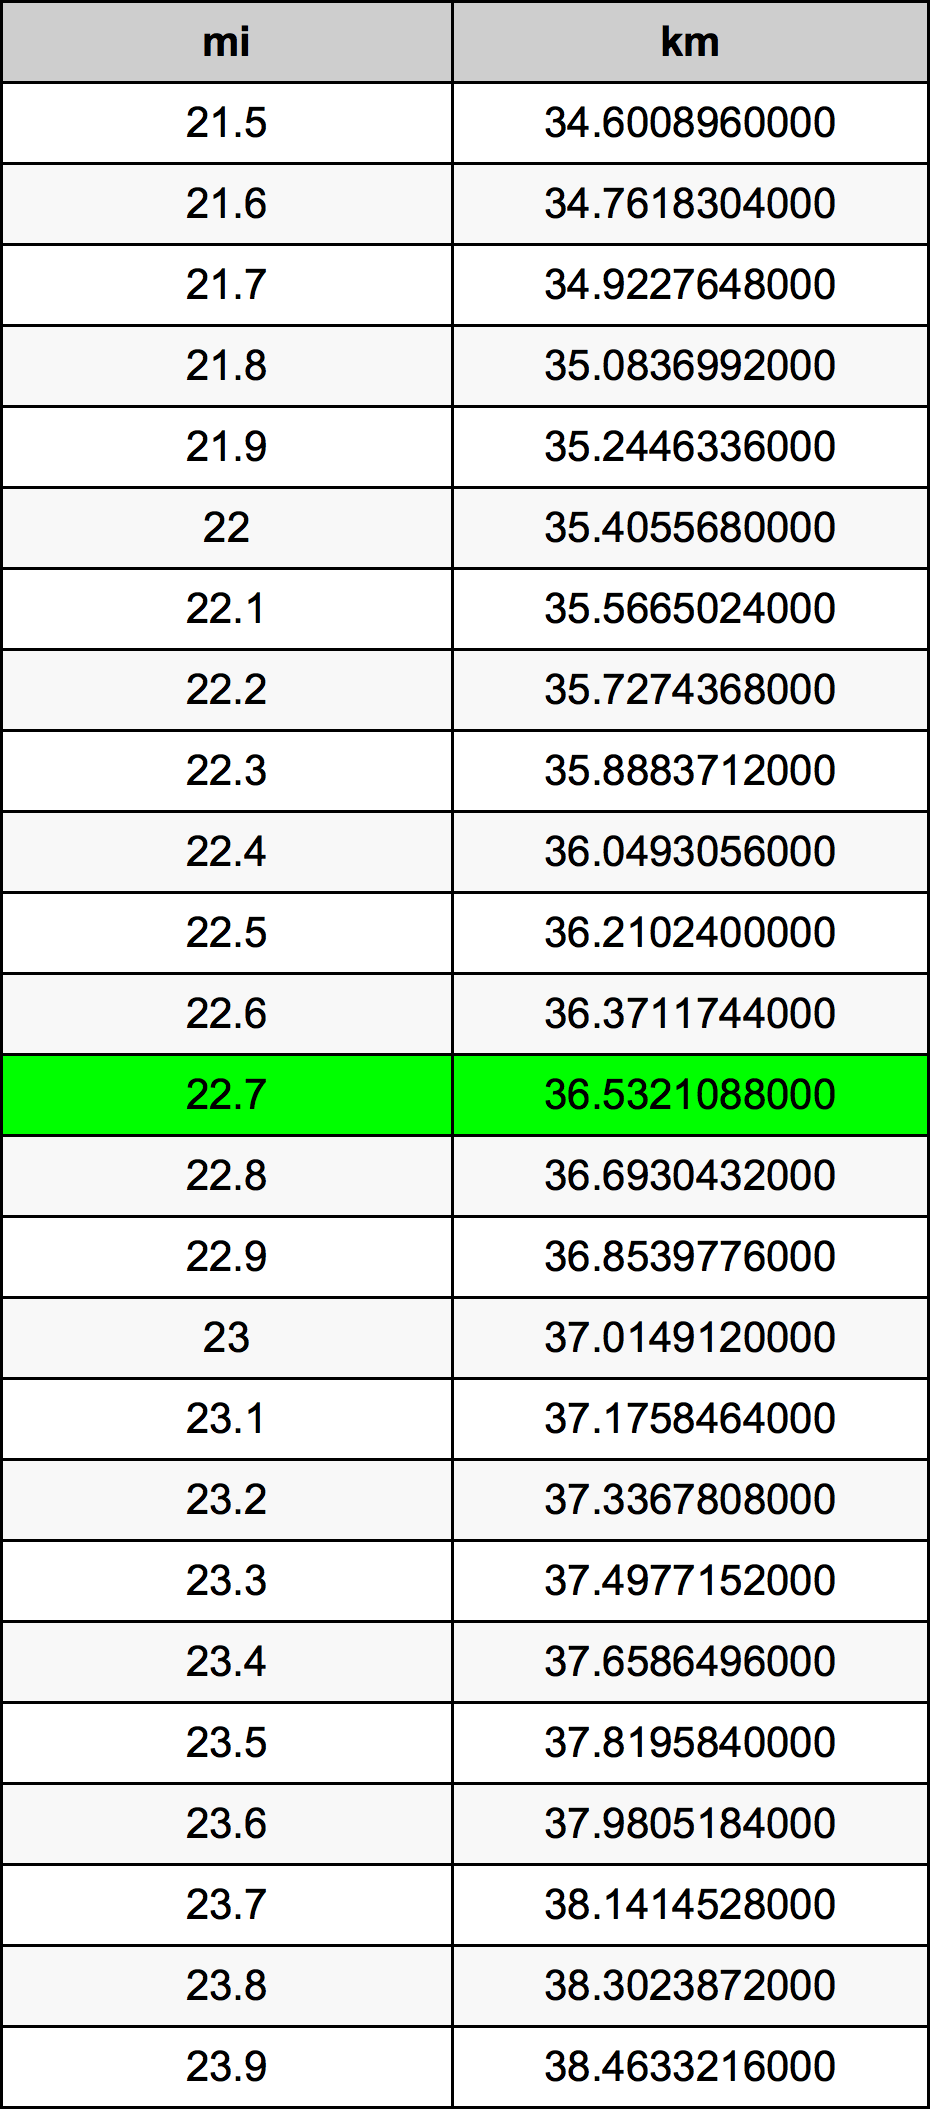 22.7 mil konversi tabel